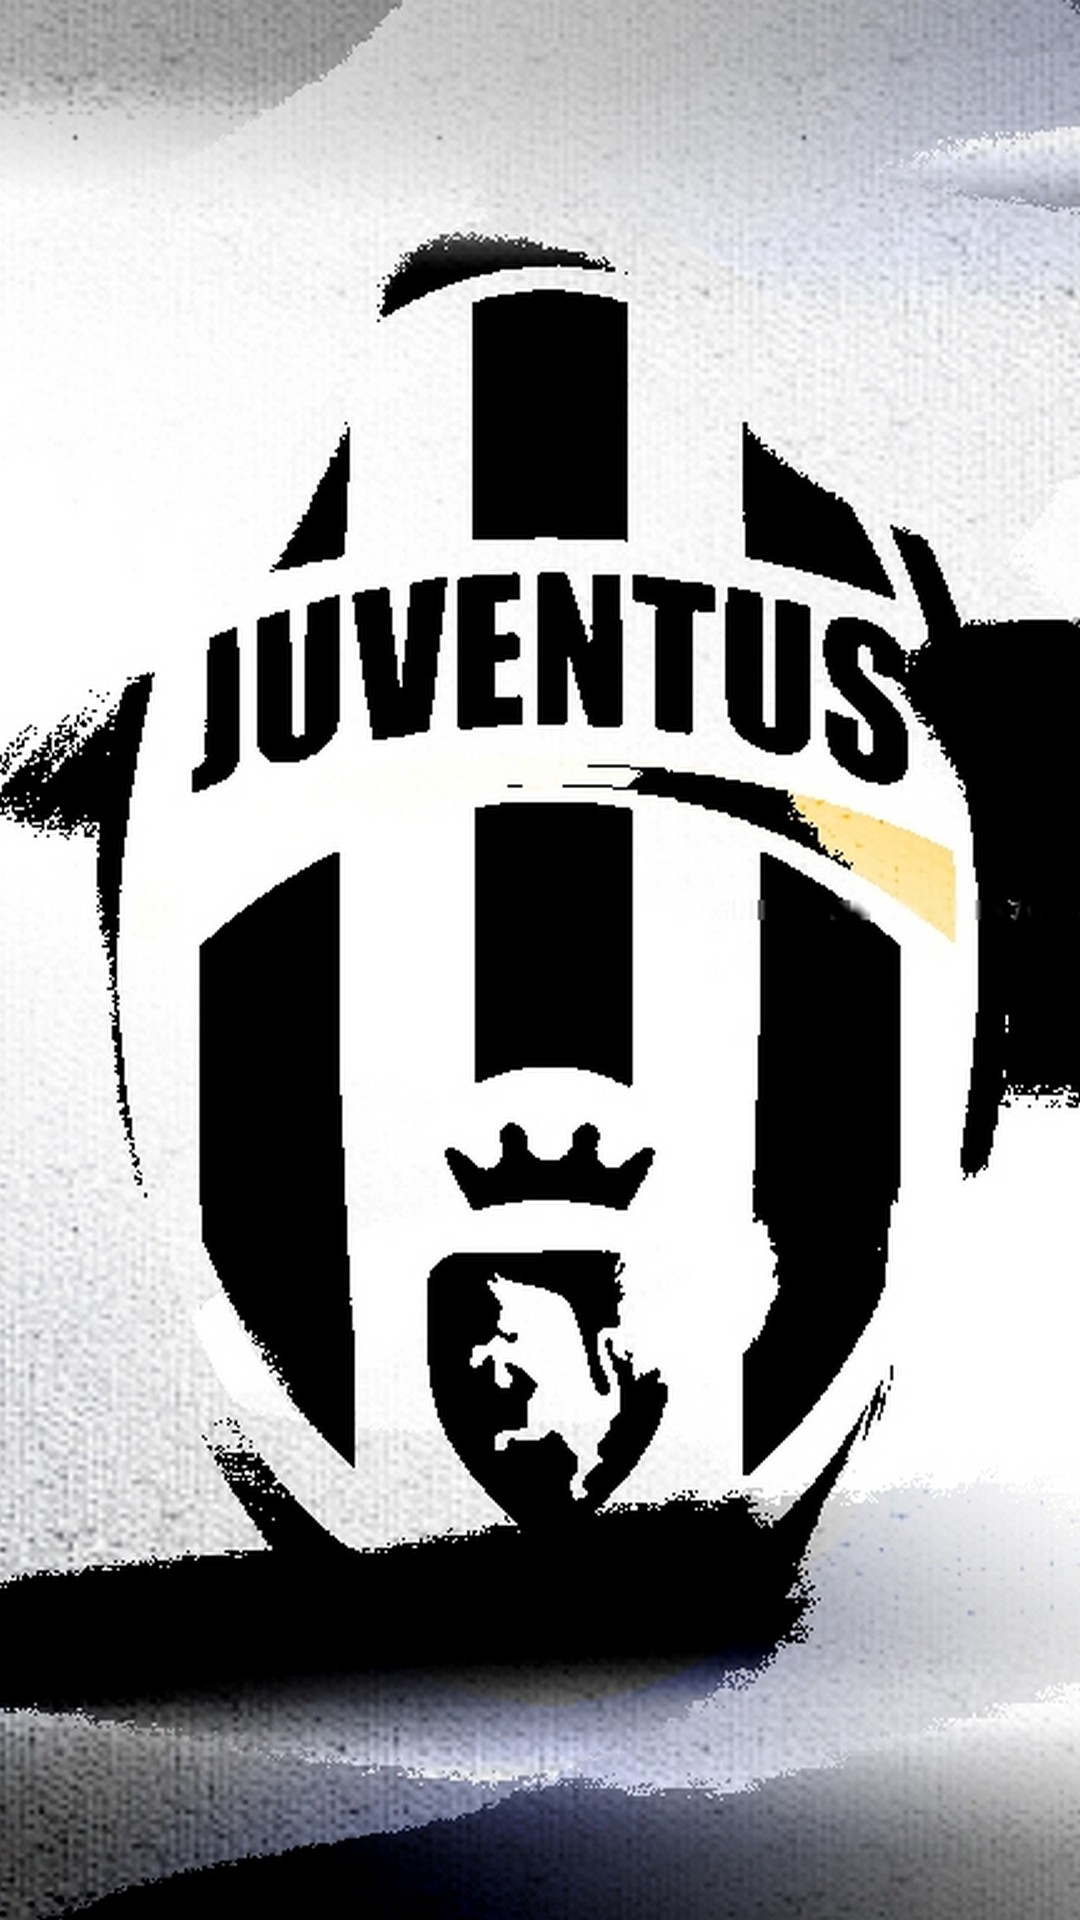 iPhone Wallpaper of Juventus FC resolution 1080x1920